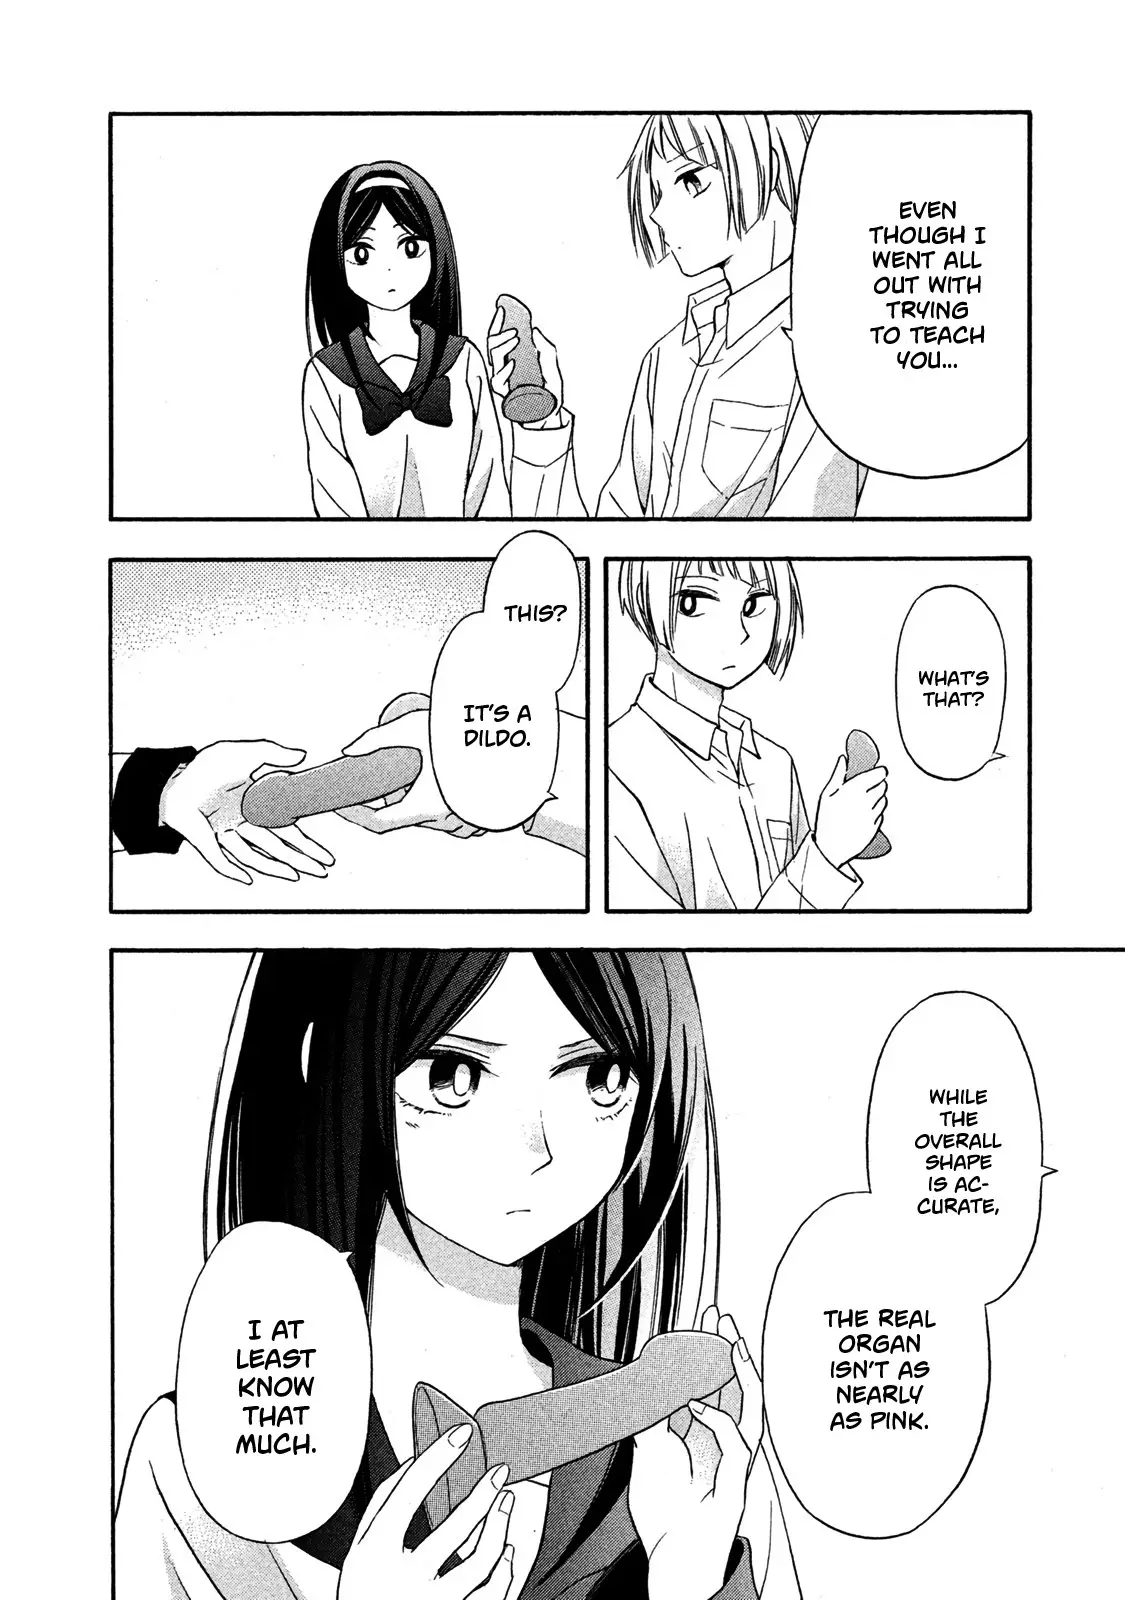 Hanazono And Kazoe's Bizzare After School Rendezvous - 5 page 14-8205c222